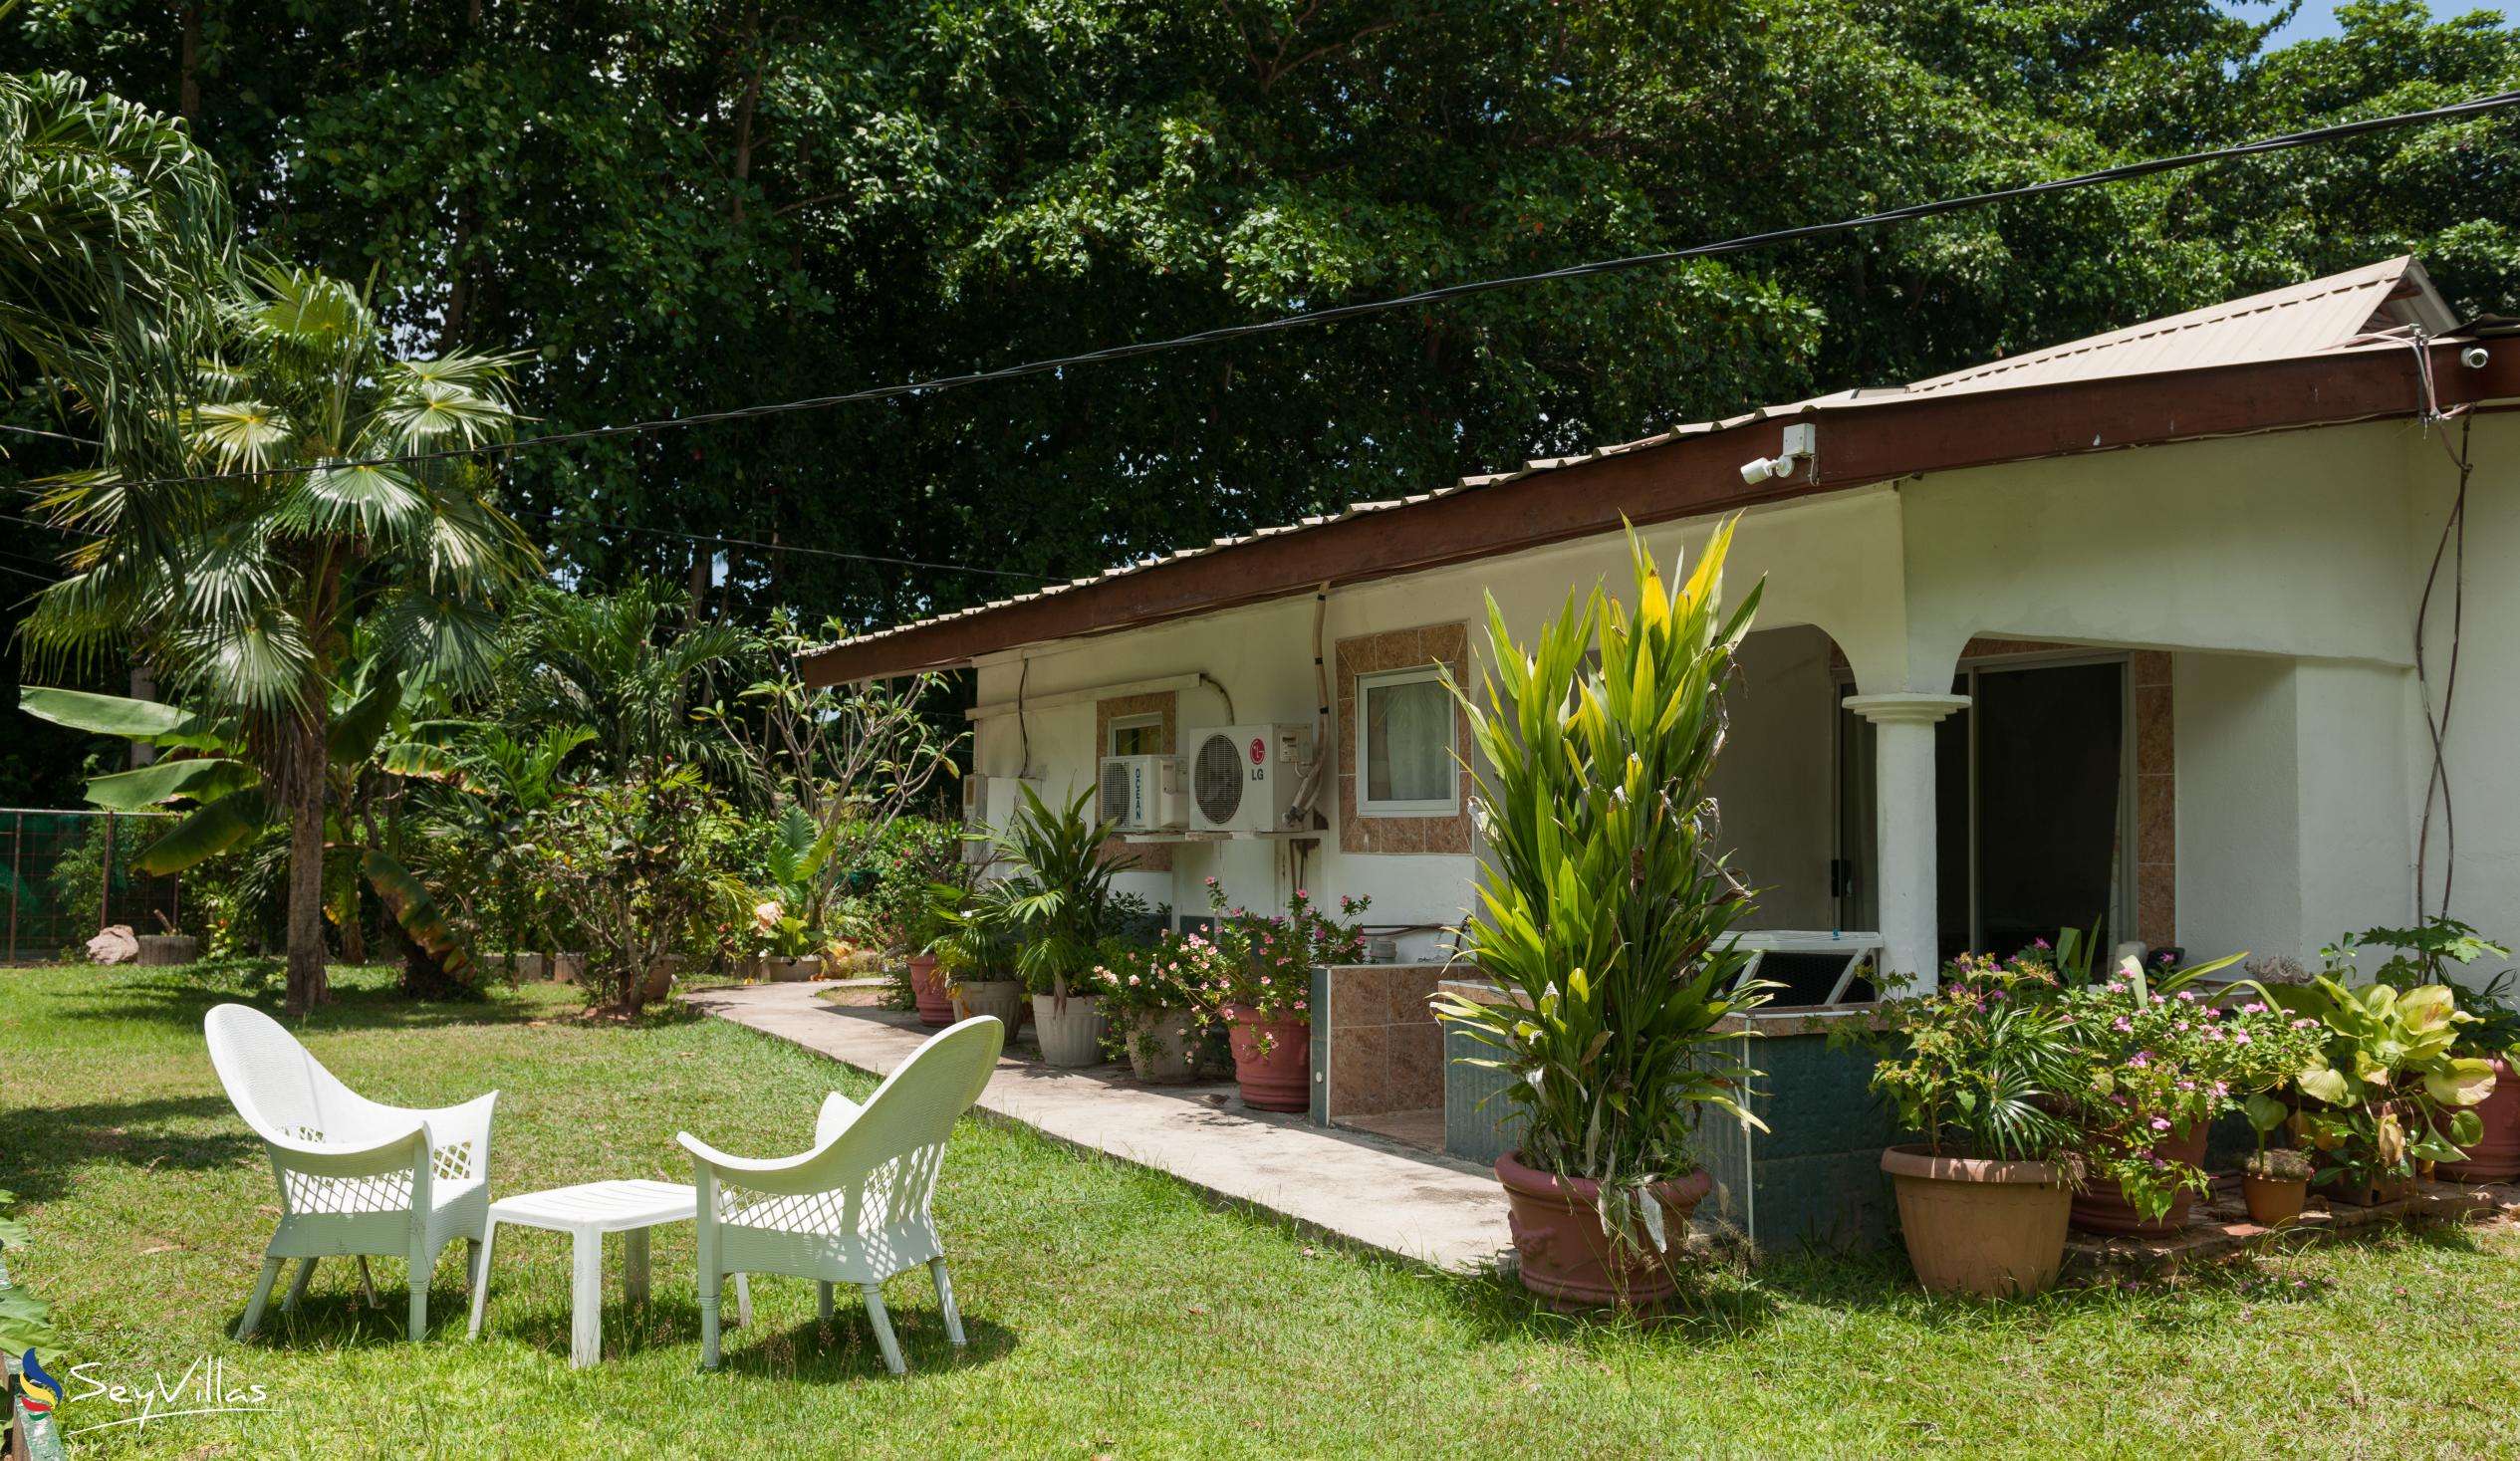 Foto 8: Rising Sun Guesthouse - Aussenbereich - La Digue (Seychellen)